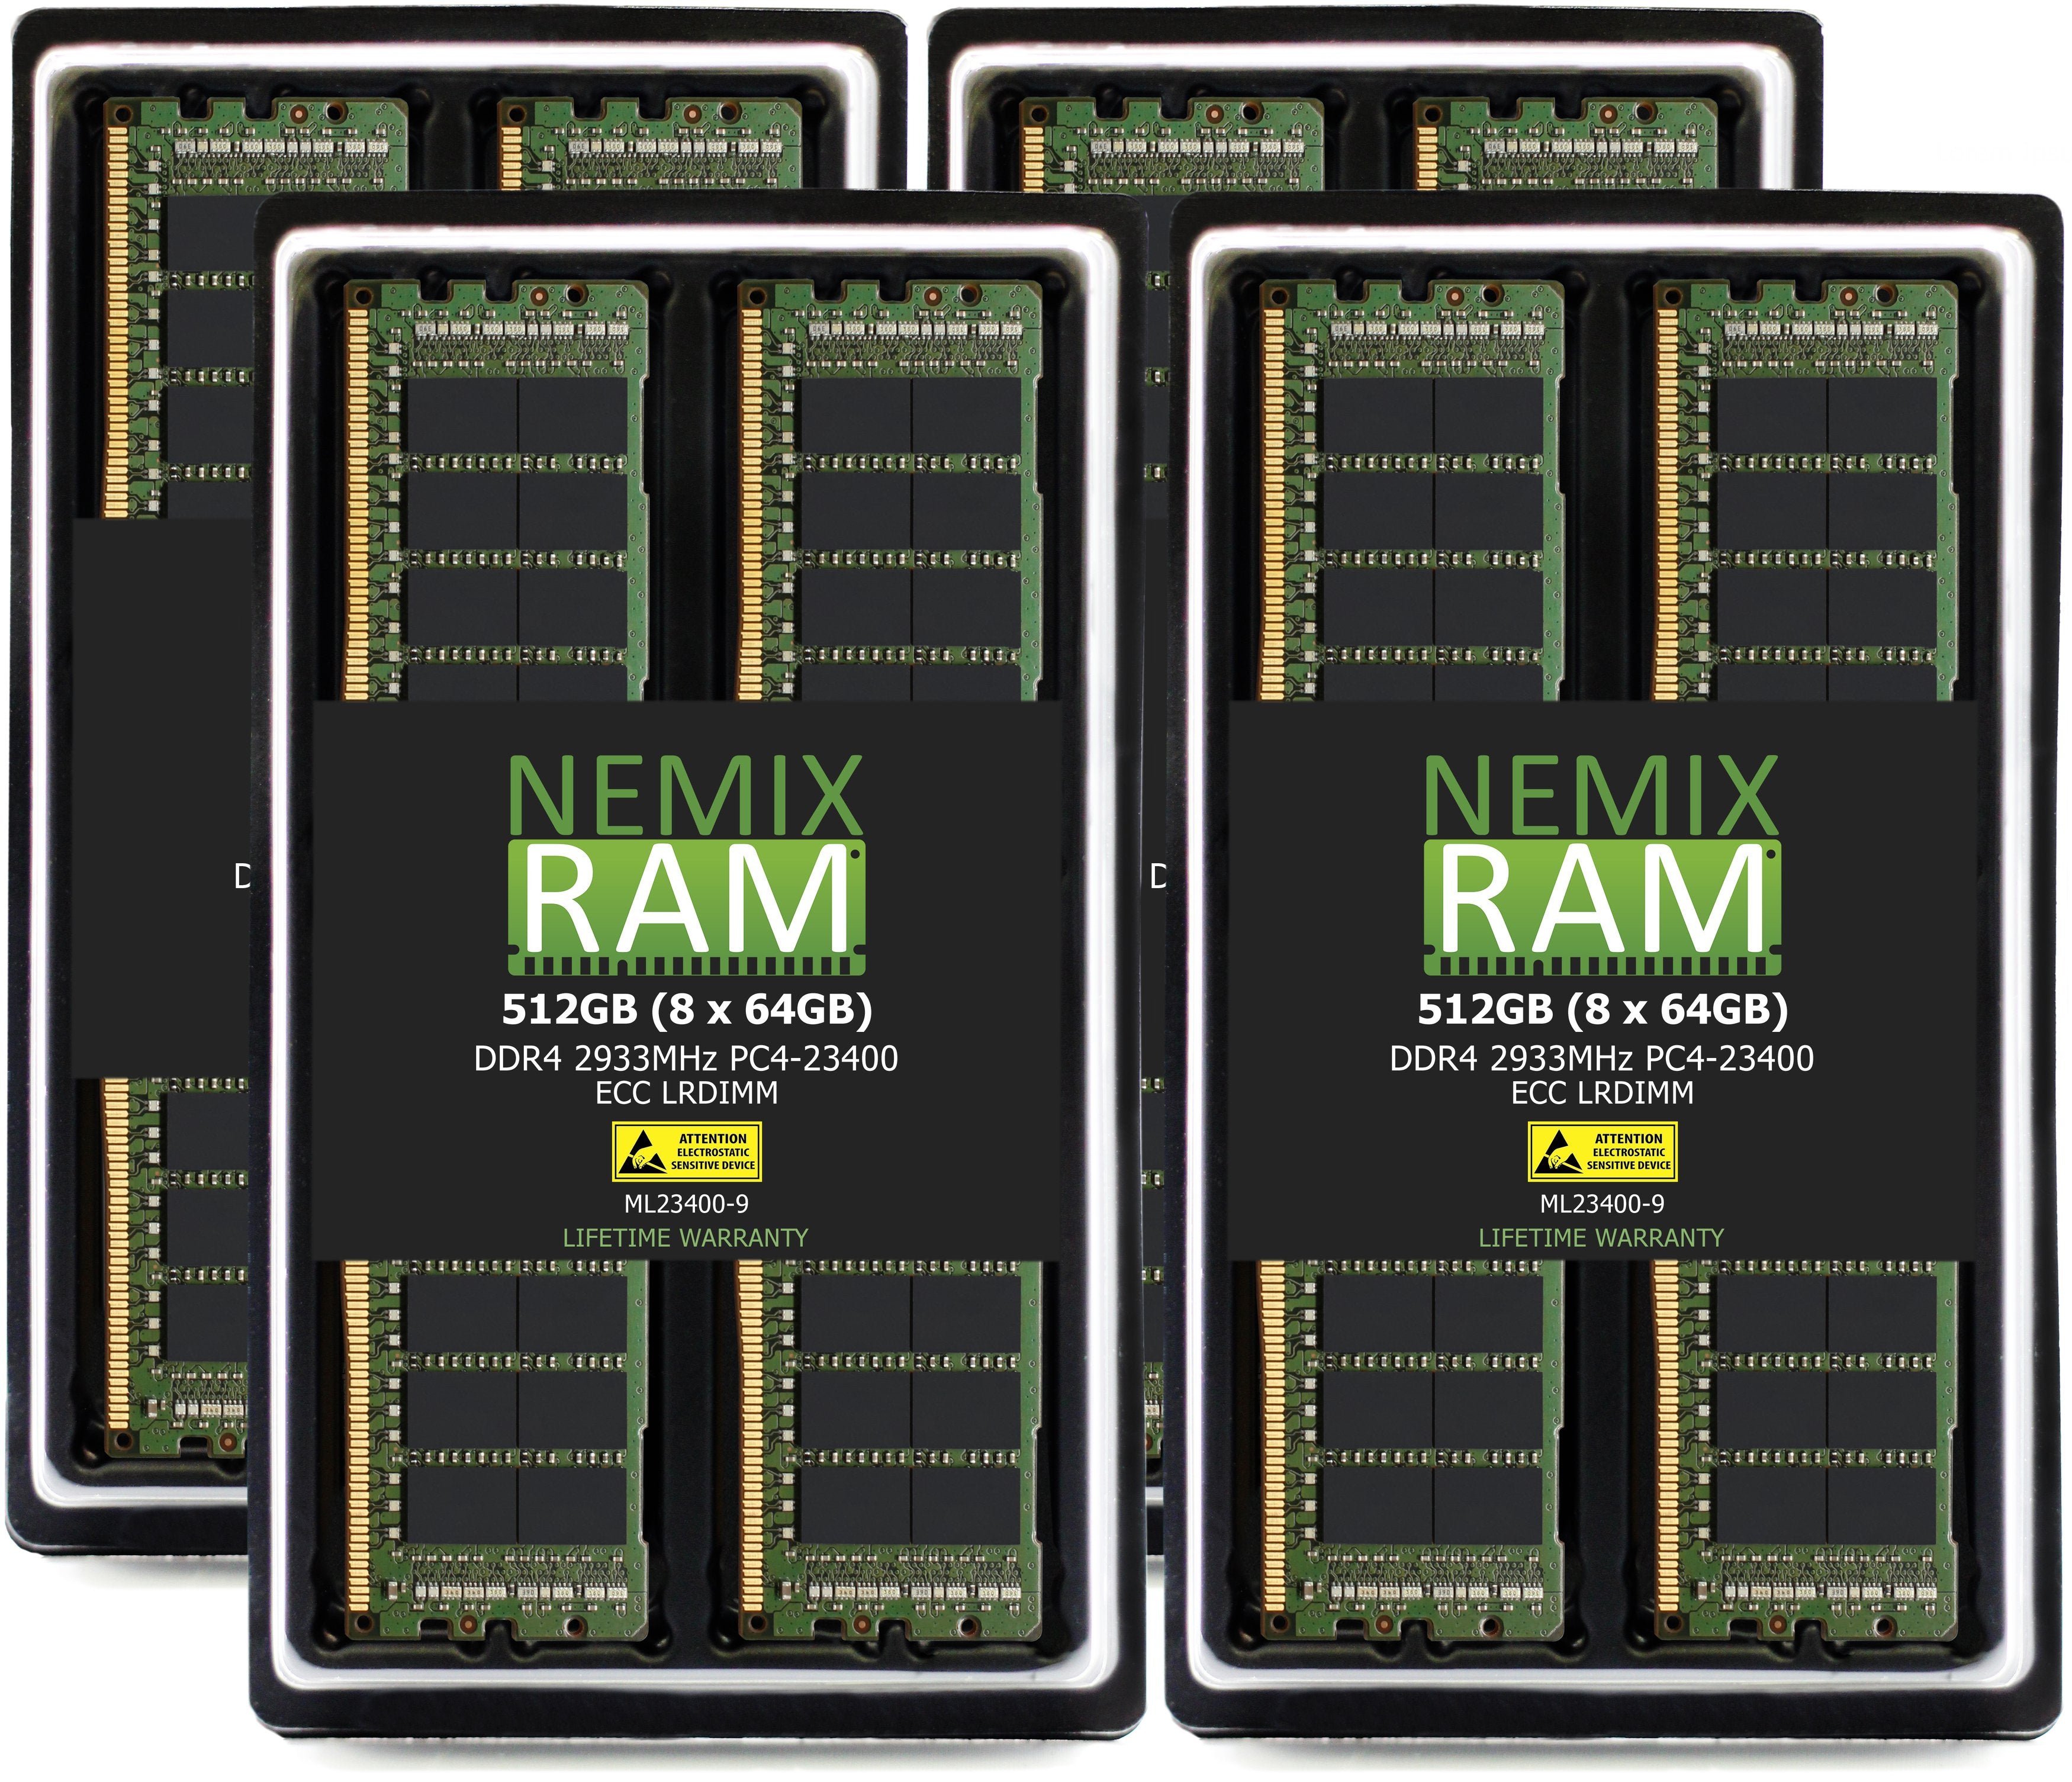 DDR4 2933MHZ PC4-23400 LRDIMM for Apple Mac Pro 2019 7,1